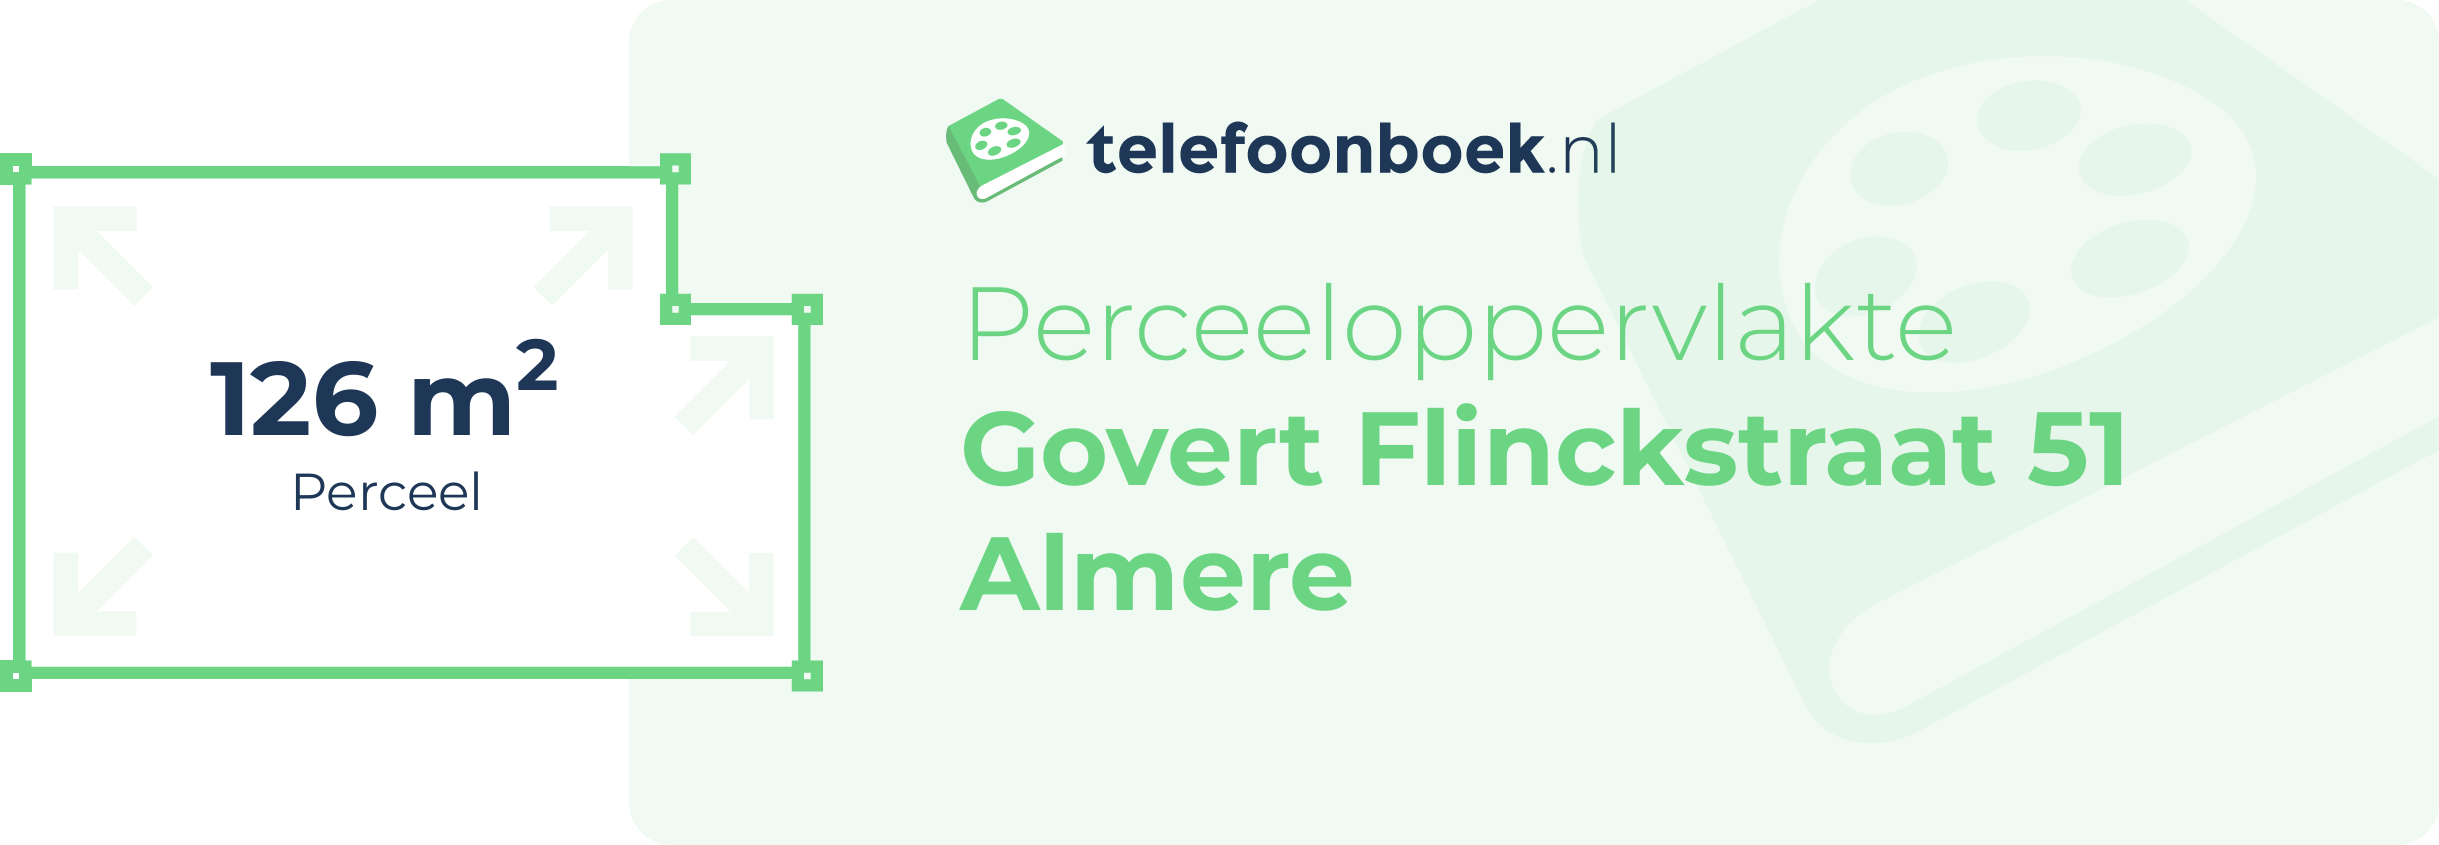 Perceeloppervlakte Govert Flinckstraat 51 Almere